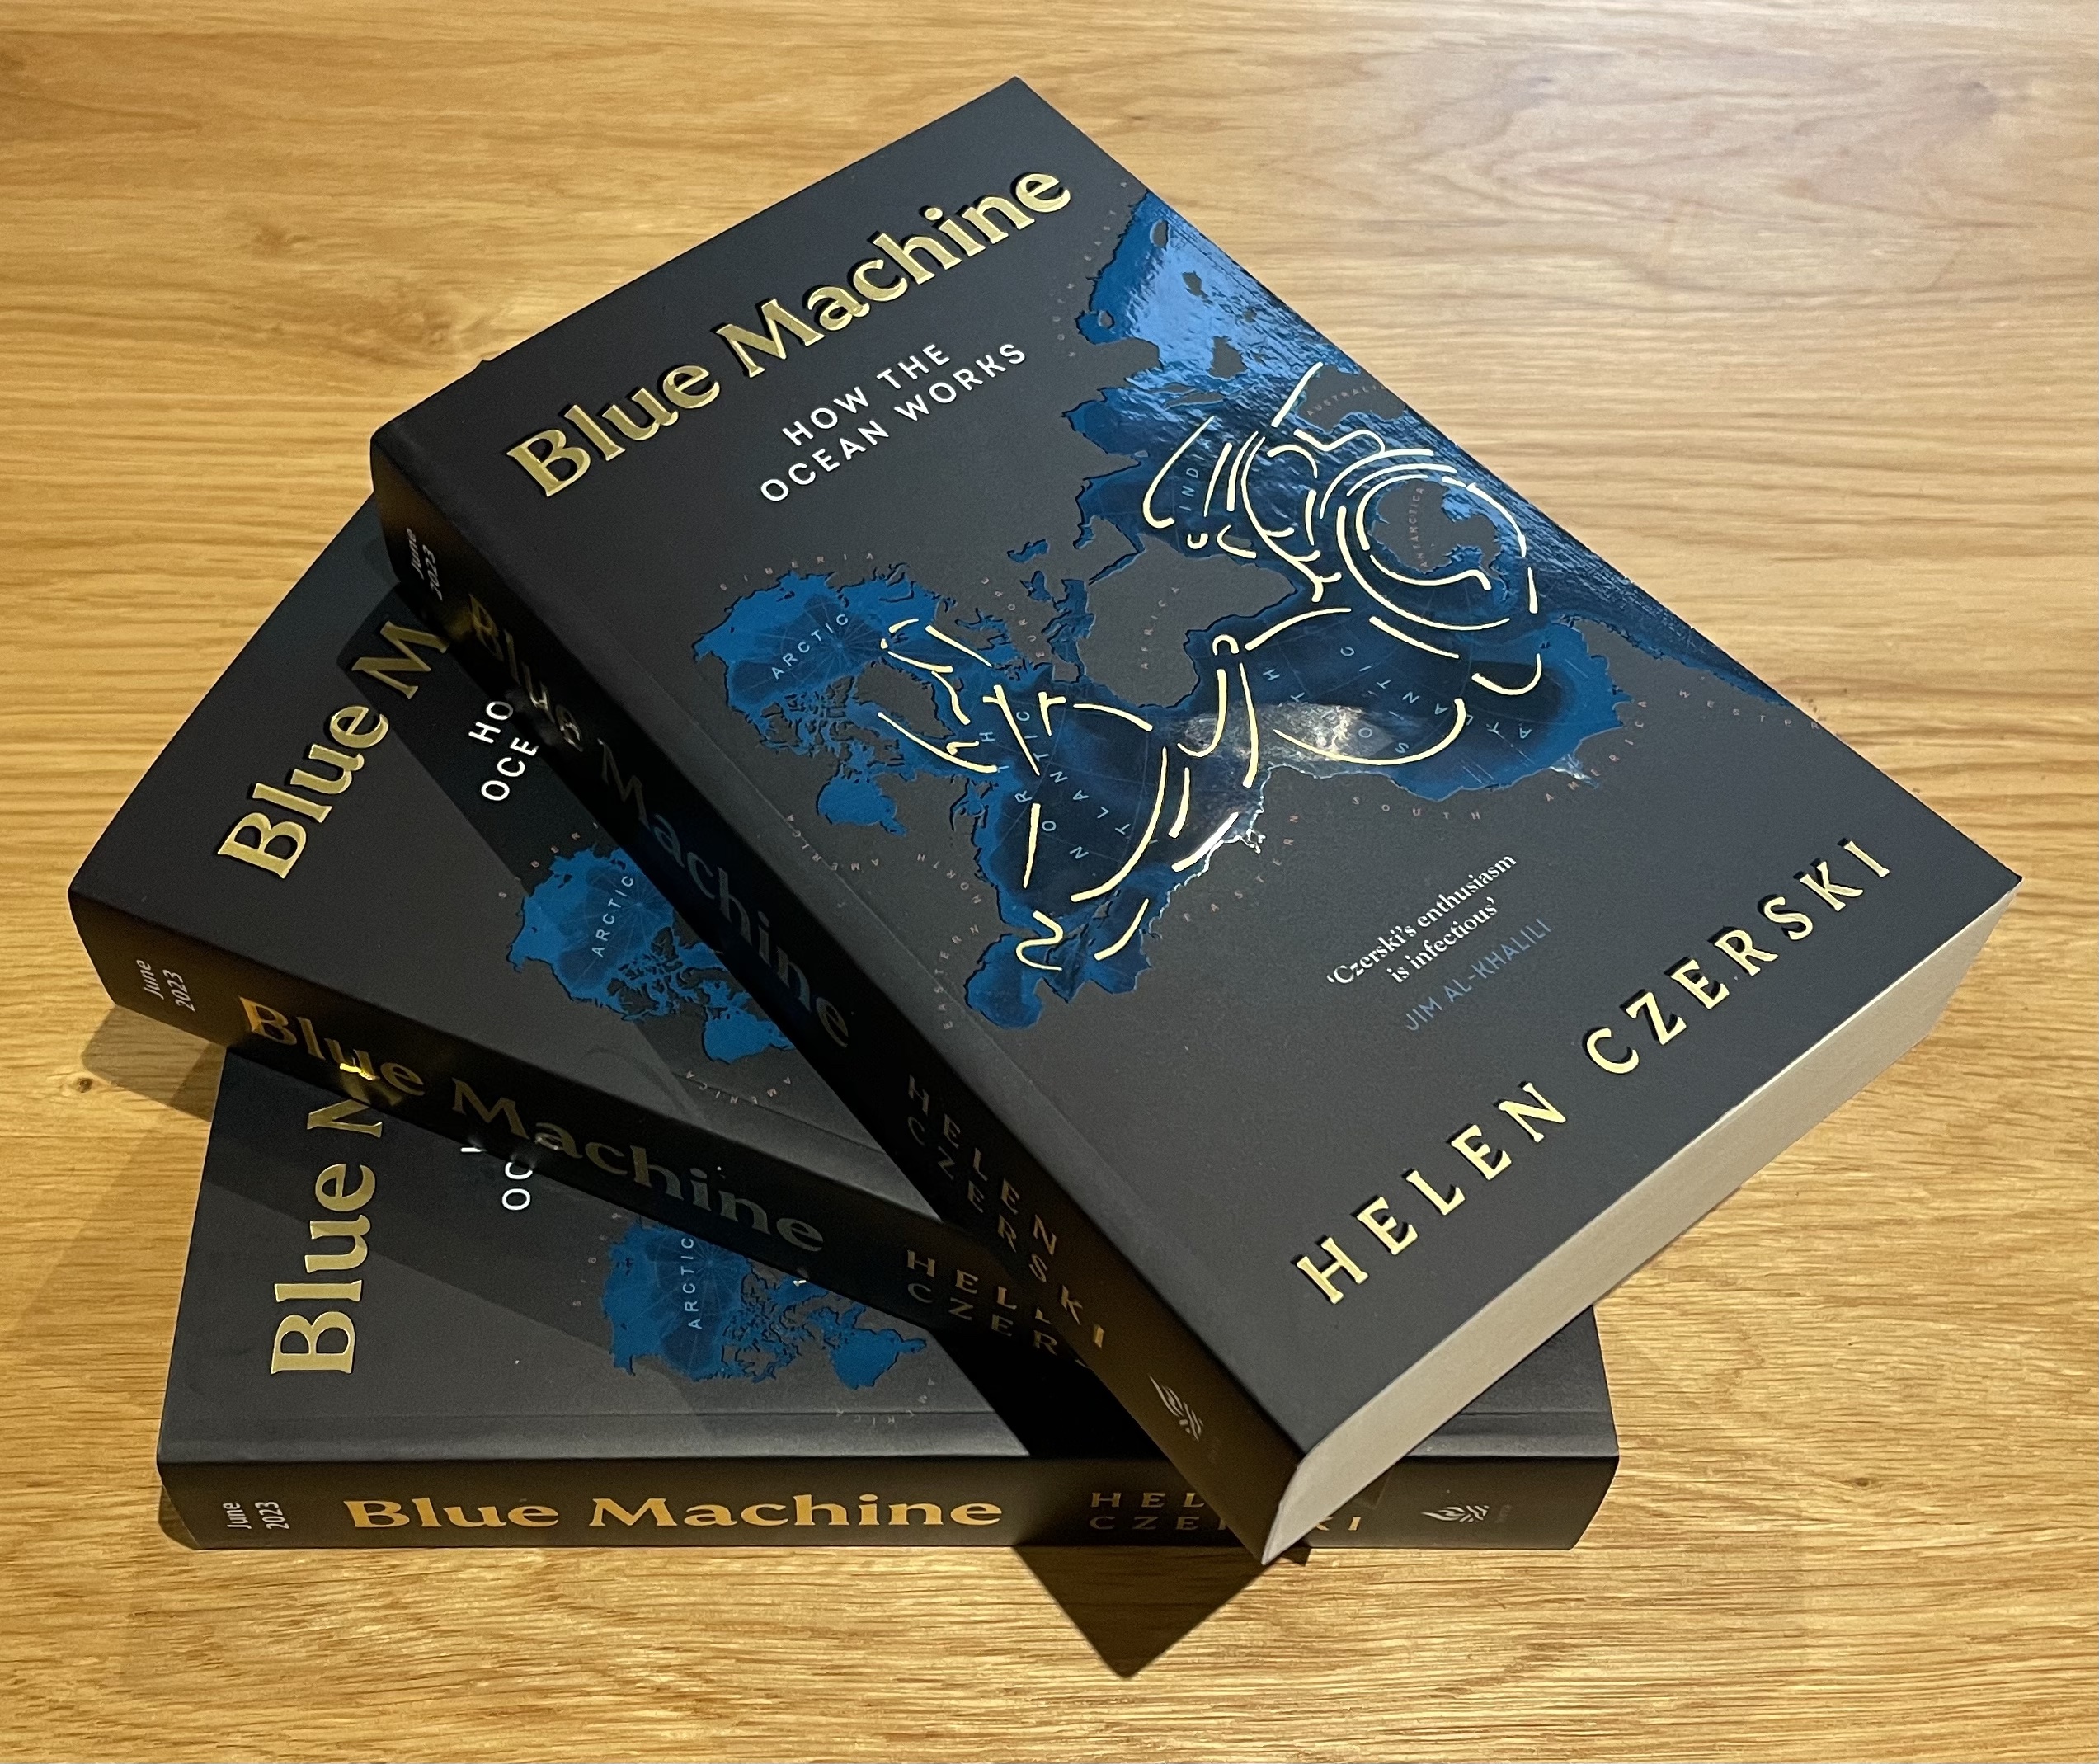 The blue machine